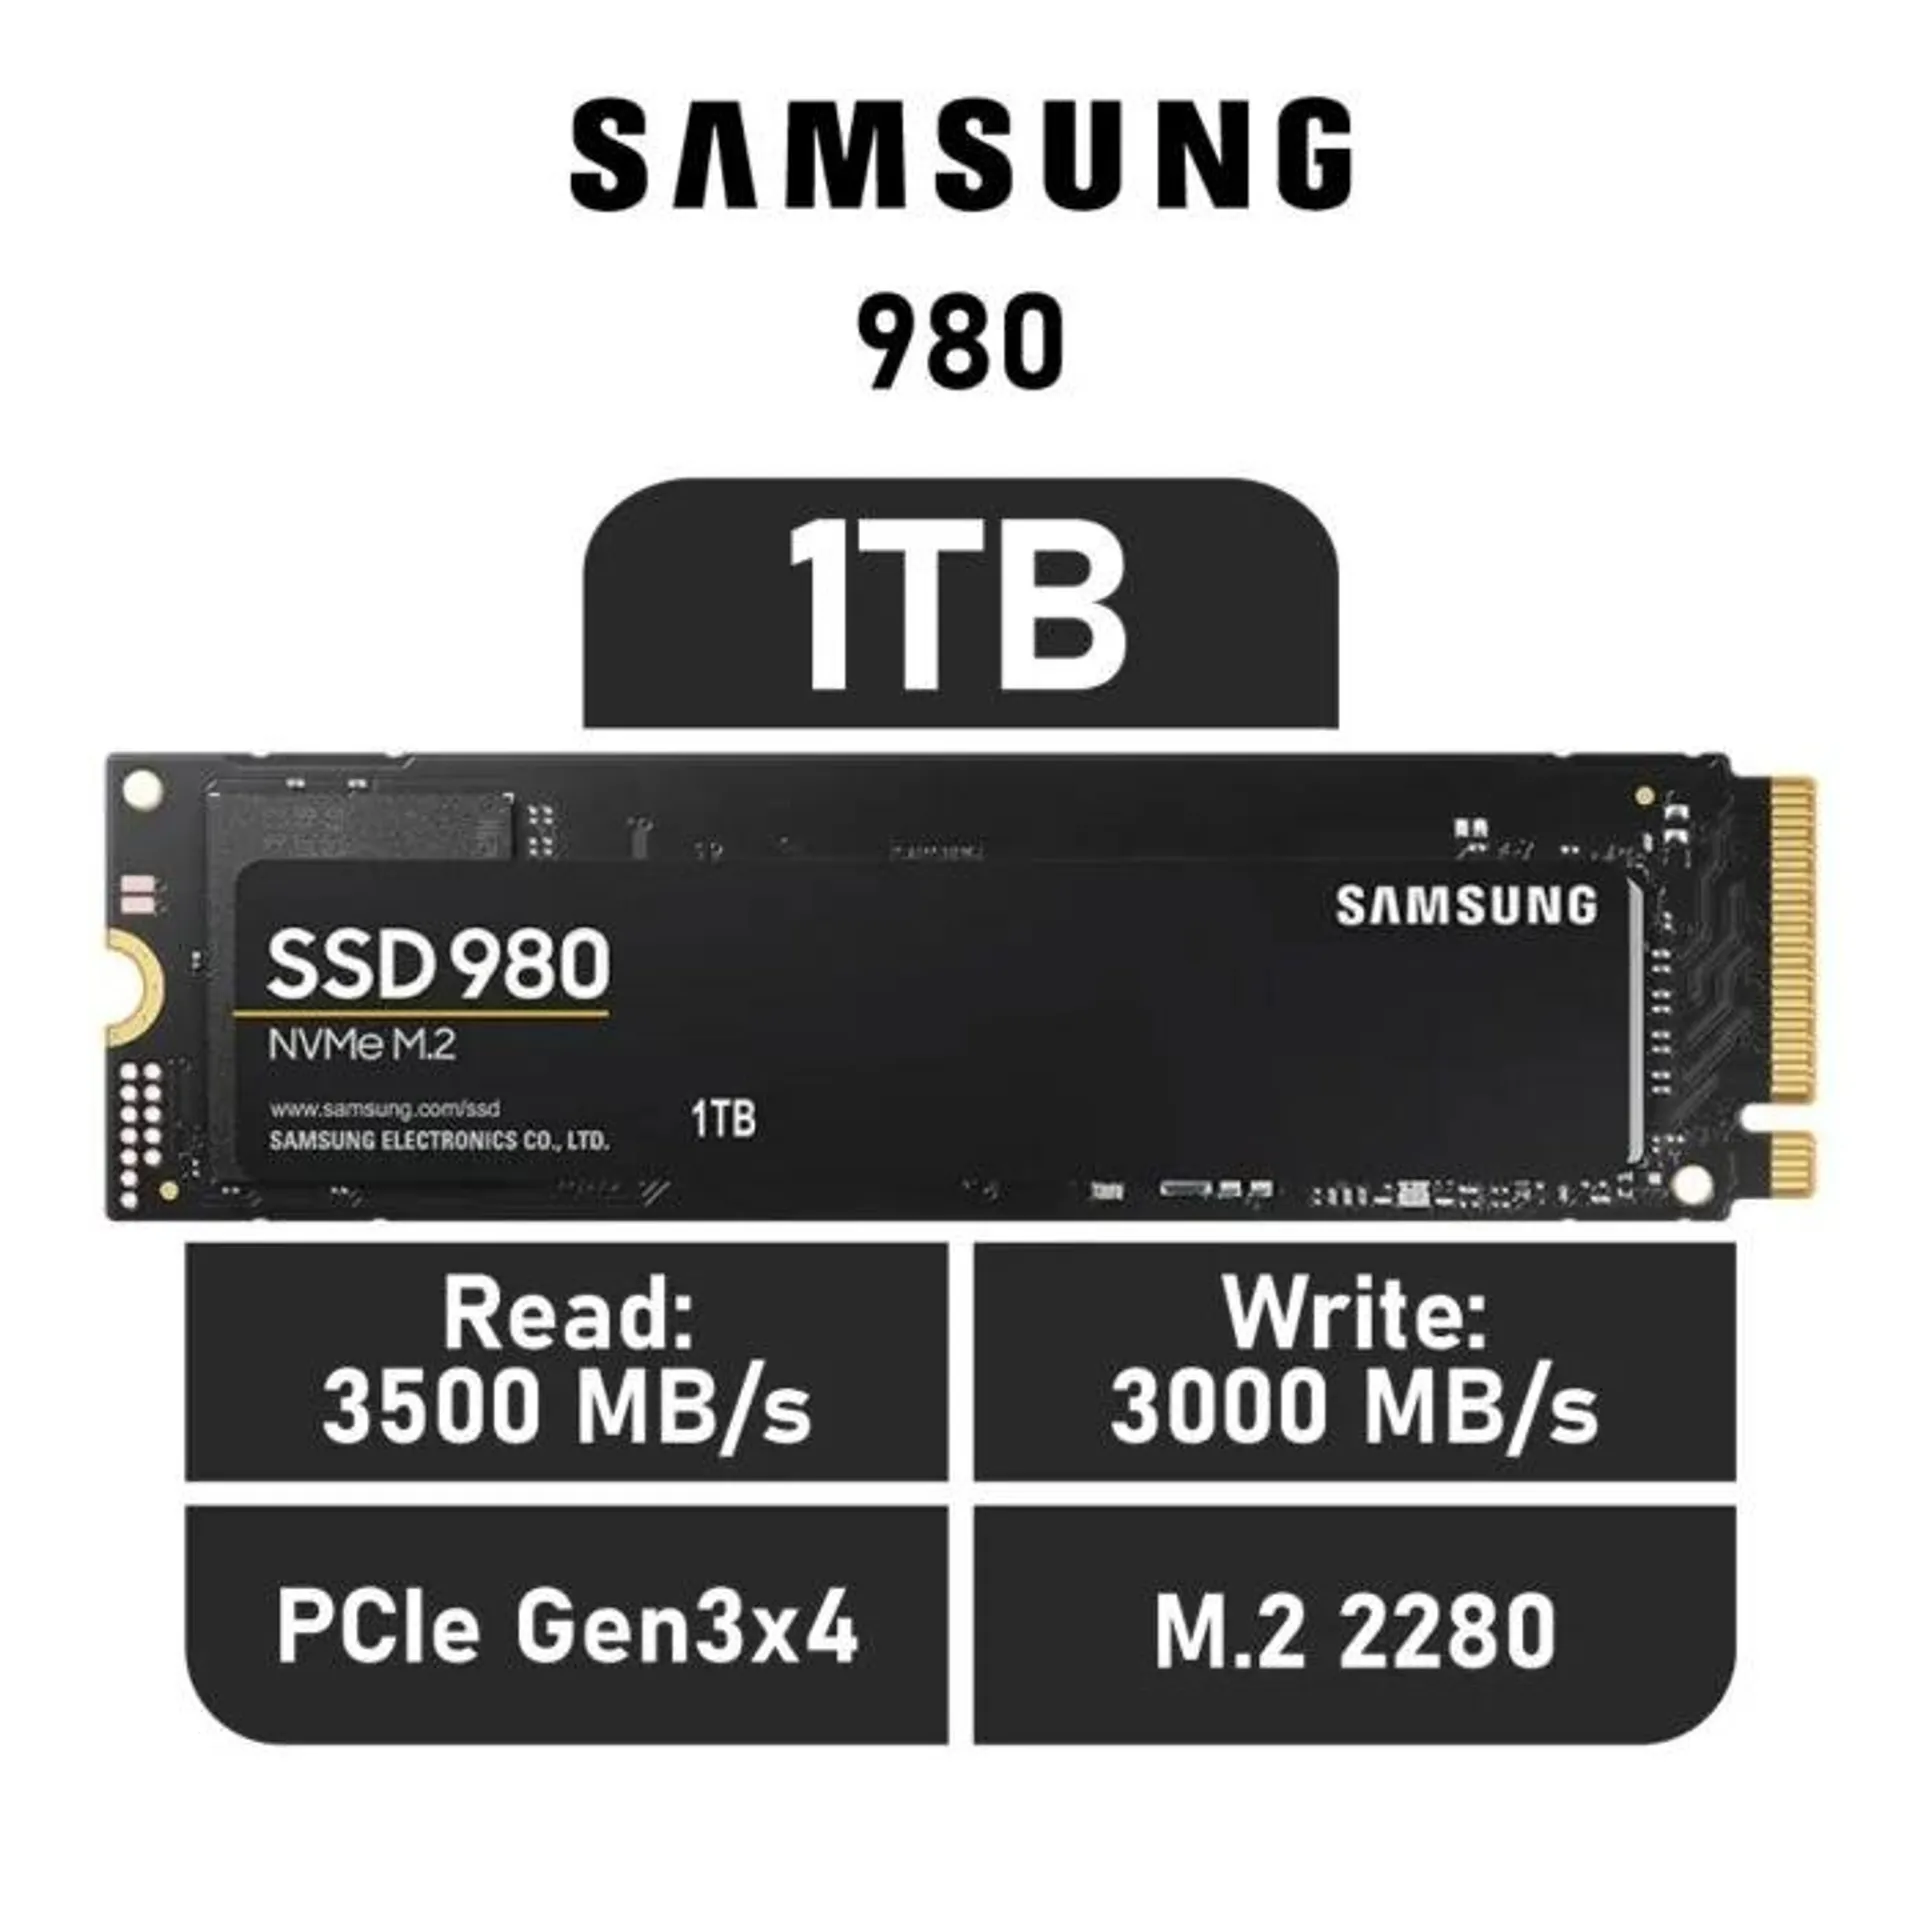 Samsung 980 1TB PCIe Gen3x4 MZ-V8V1T0BW M.2 2280 Solid State Drive